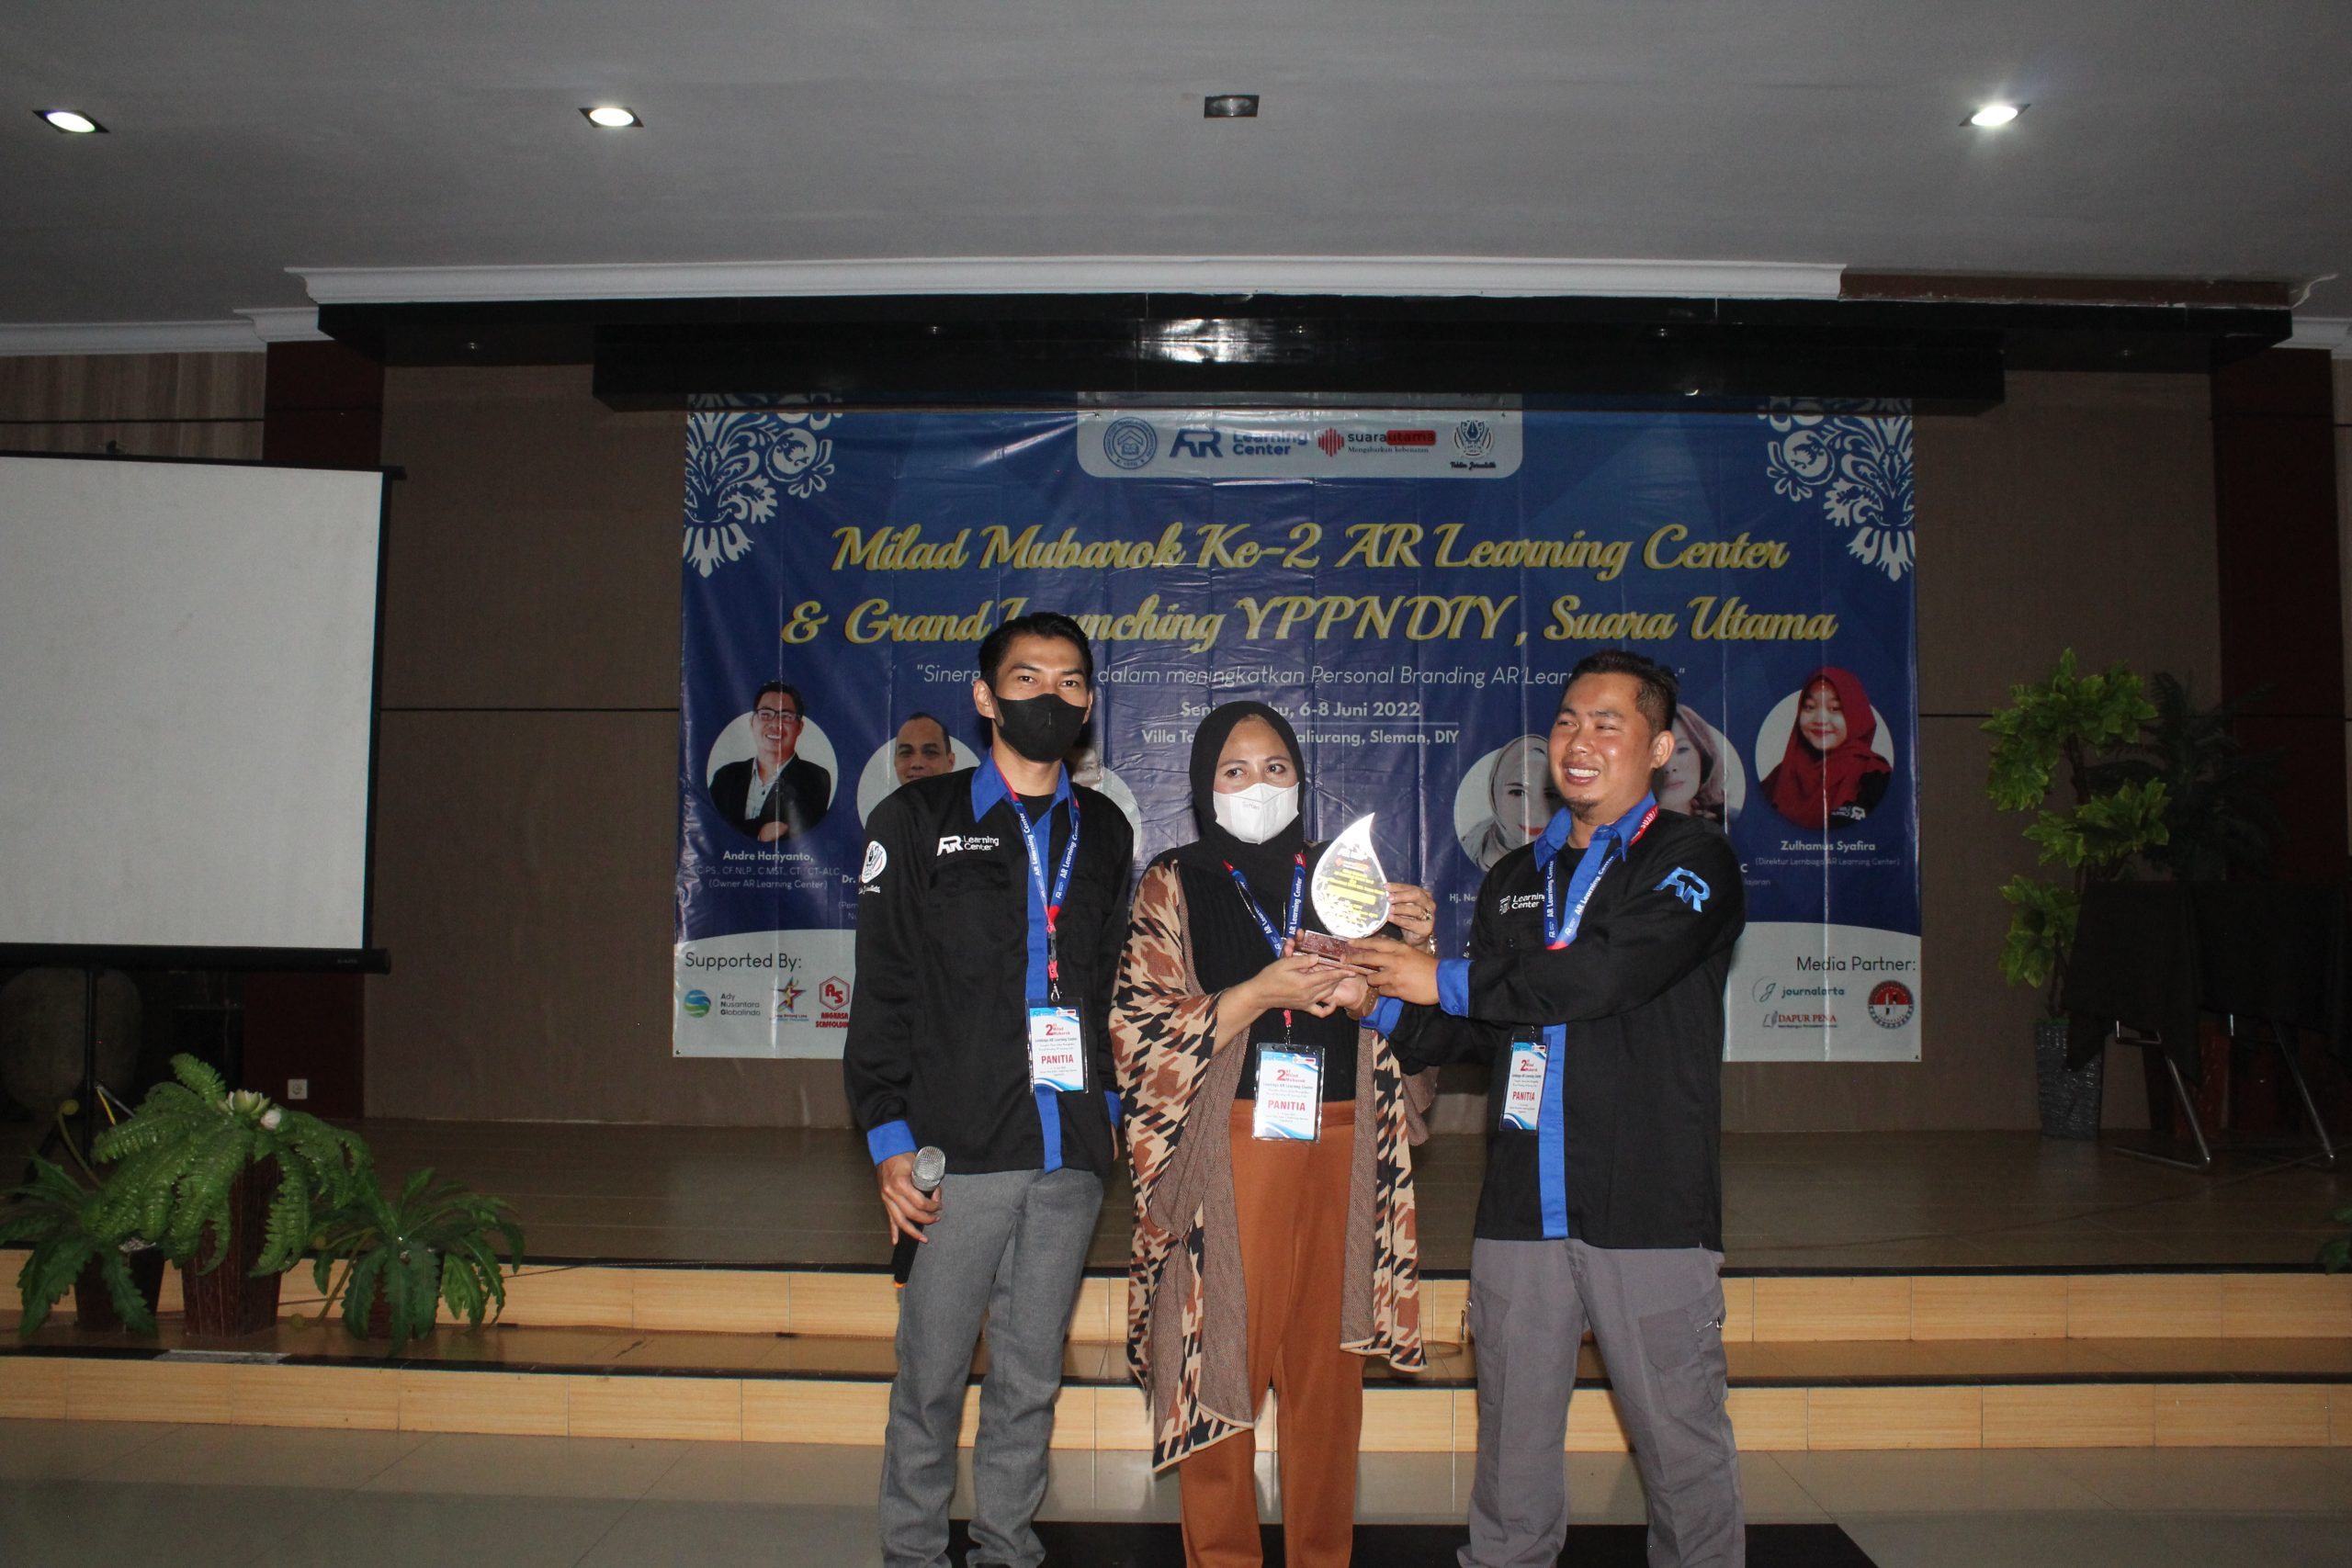 IMG 6473 scaled Momen MILAD: Berikut Penerima Award AR Learning Center 2022, Selamat dan Sukses Suara Utama ID Mengabarkan Kebenaran | Website Resmi Suara Utama